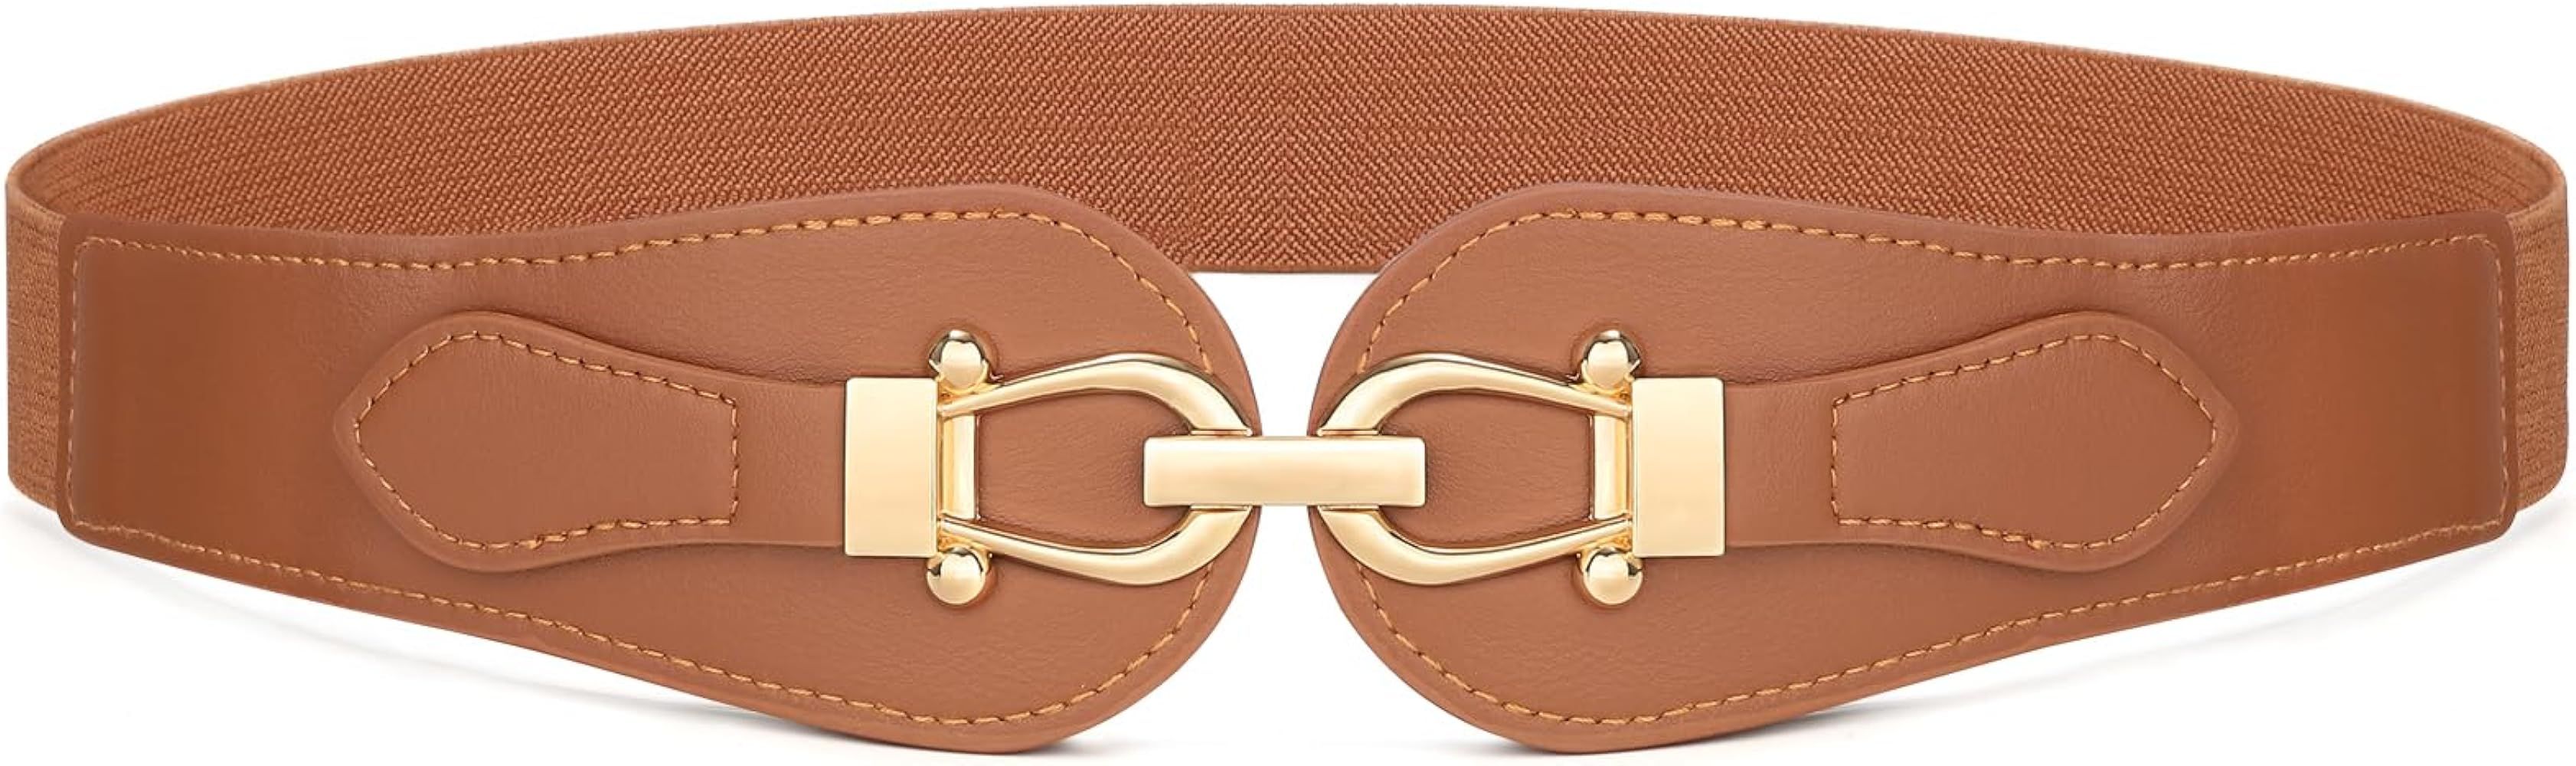 VONMELLI Wide Elastic Belts for Women, Stretch Ladies Waist Belt with Fashion Gold Buckle, Vintag... | Amazon (US)